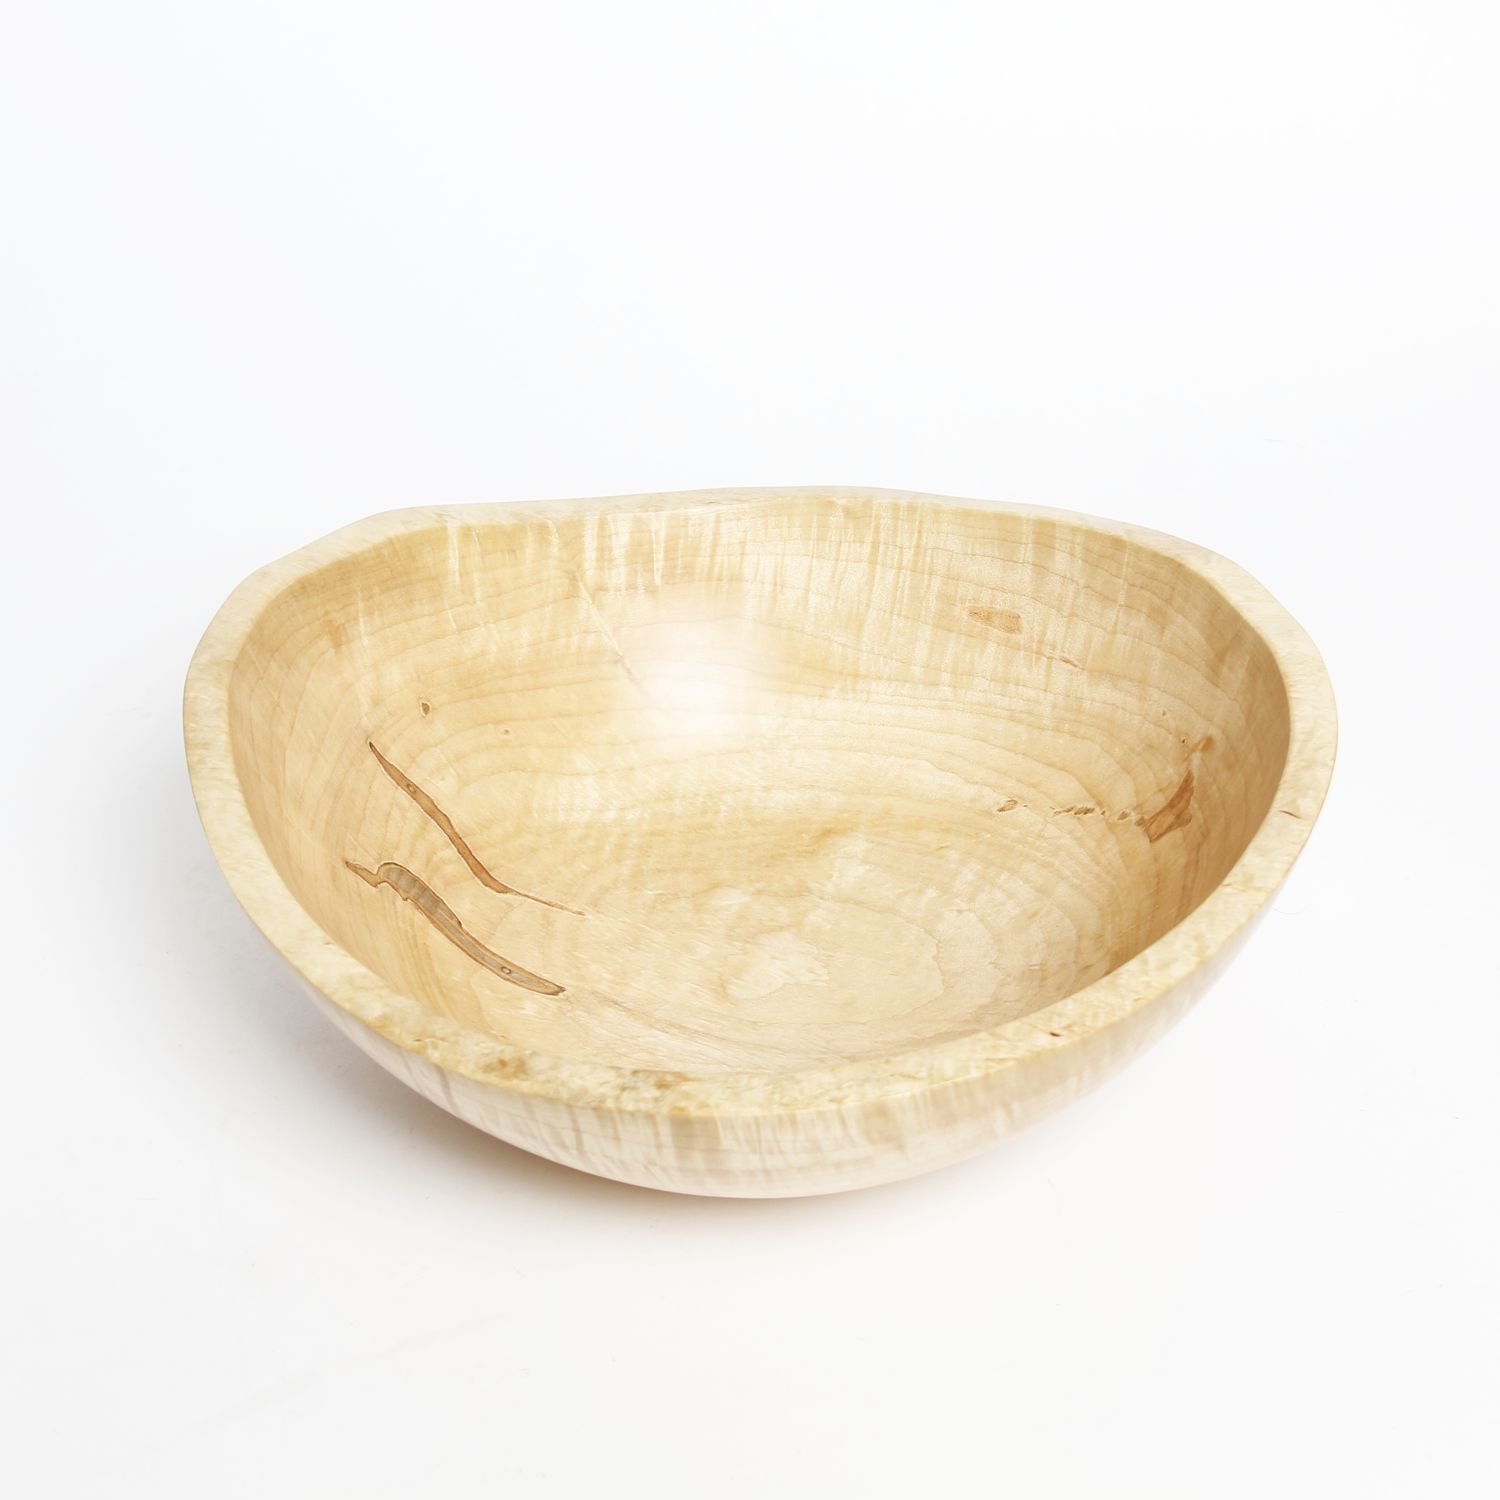 Michael Sbrocca: Bowl Maple Product Image 2 of 3